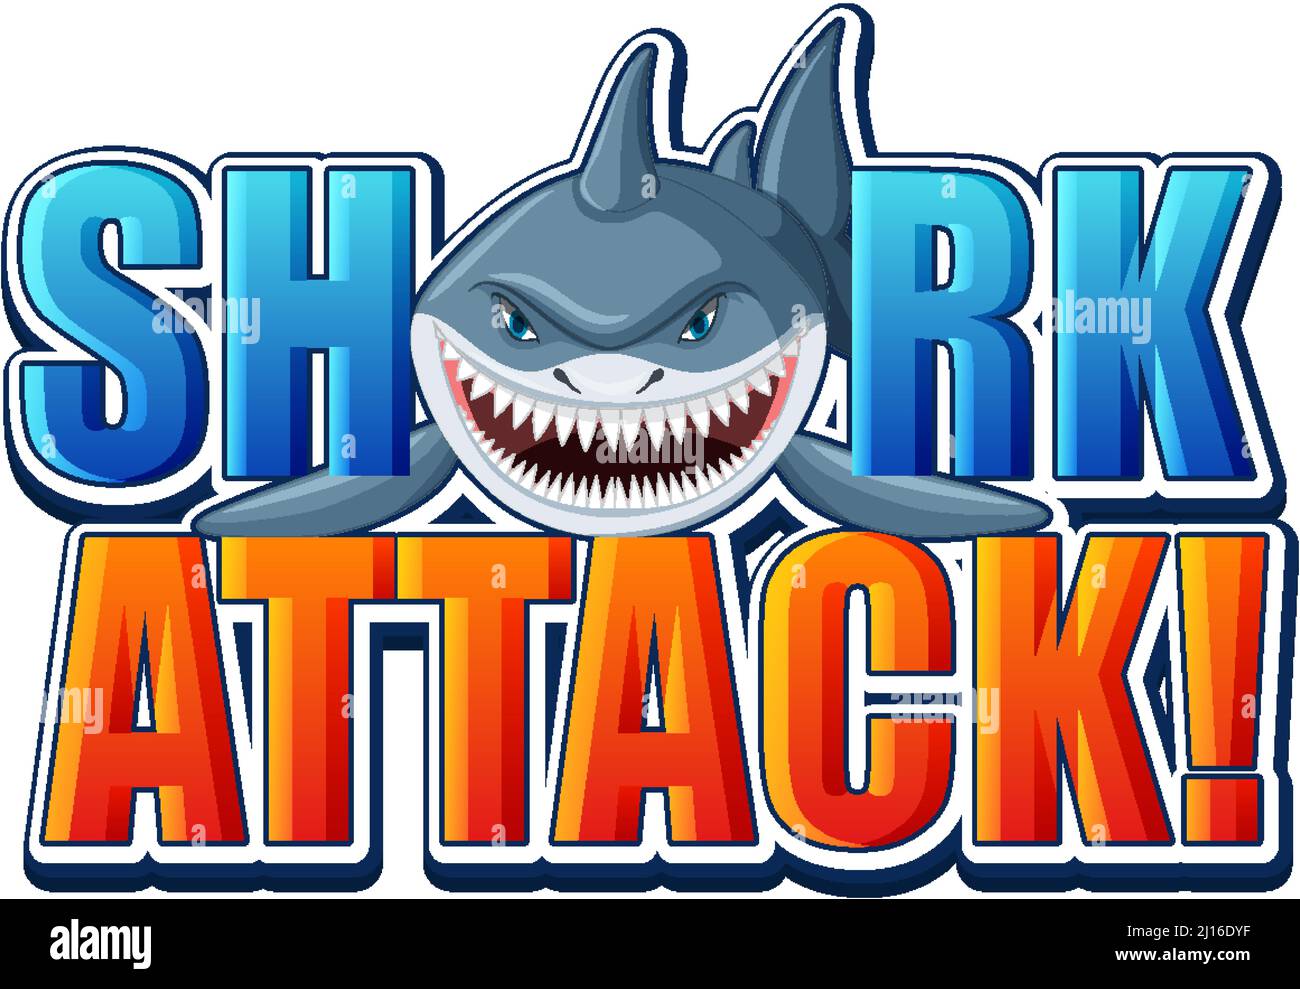 Shark attack font logo with cartoon aggressive shark illustration Stock  Vector Image & Art - Alamy